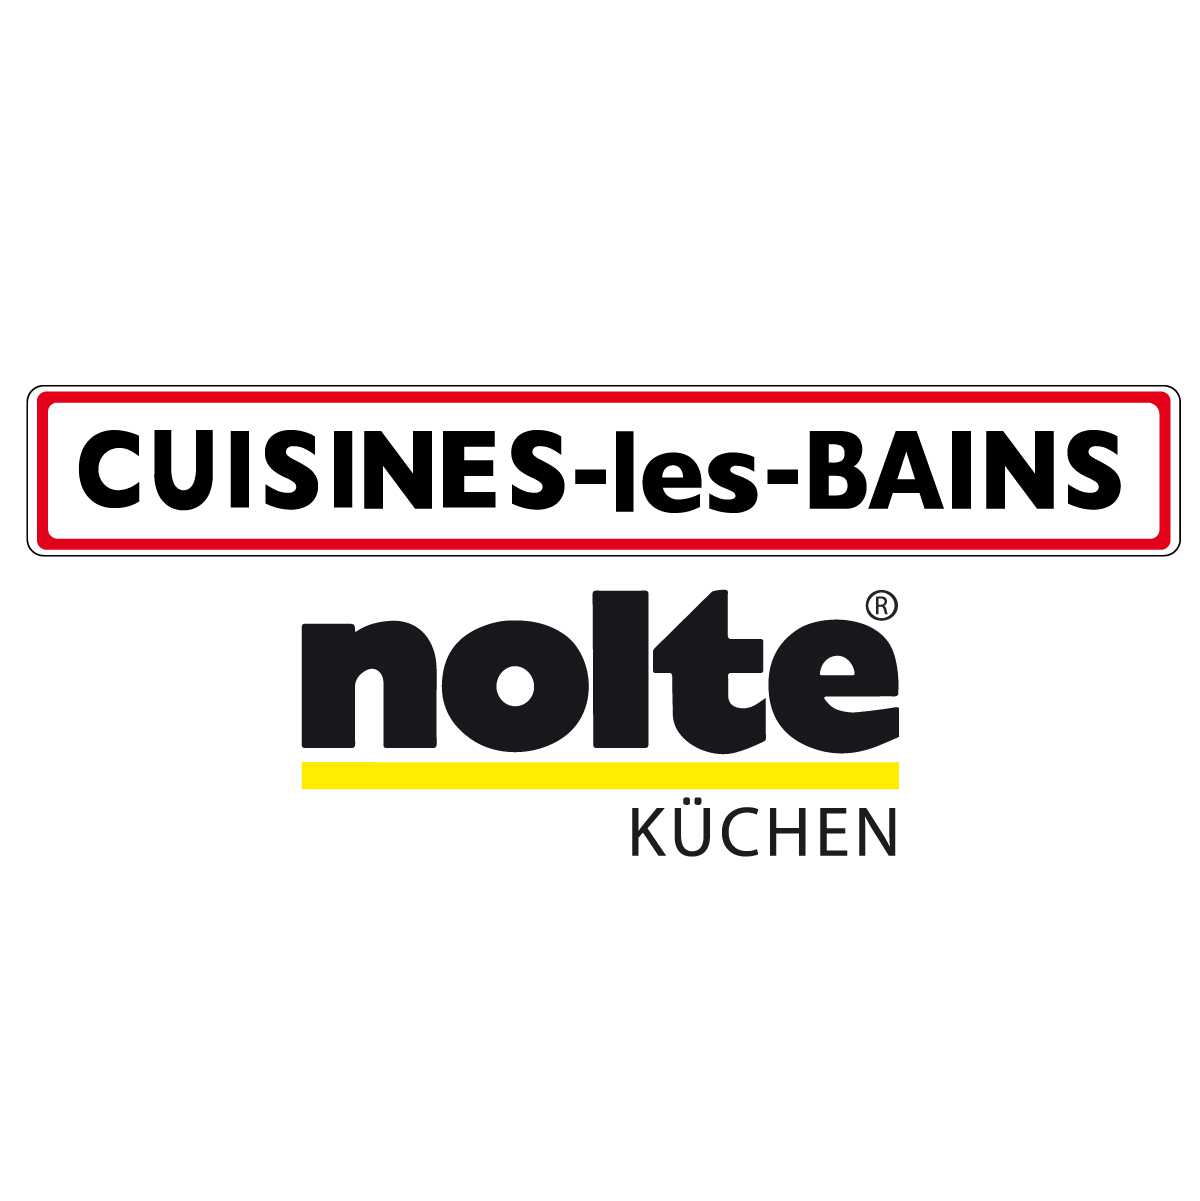 (c) Cuisines-lesbains.fr